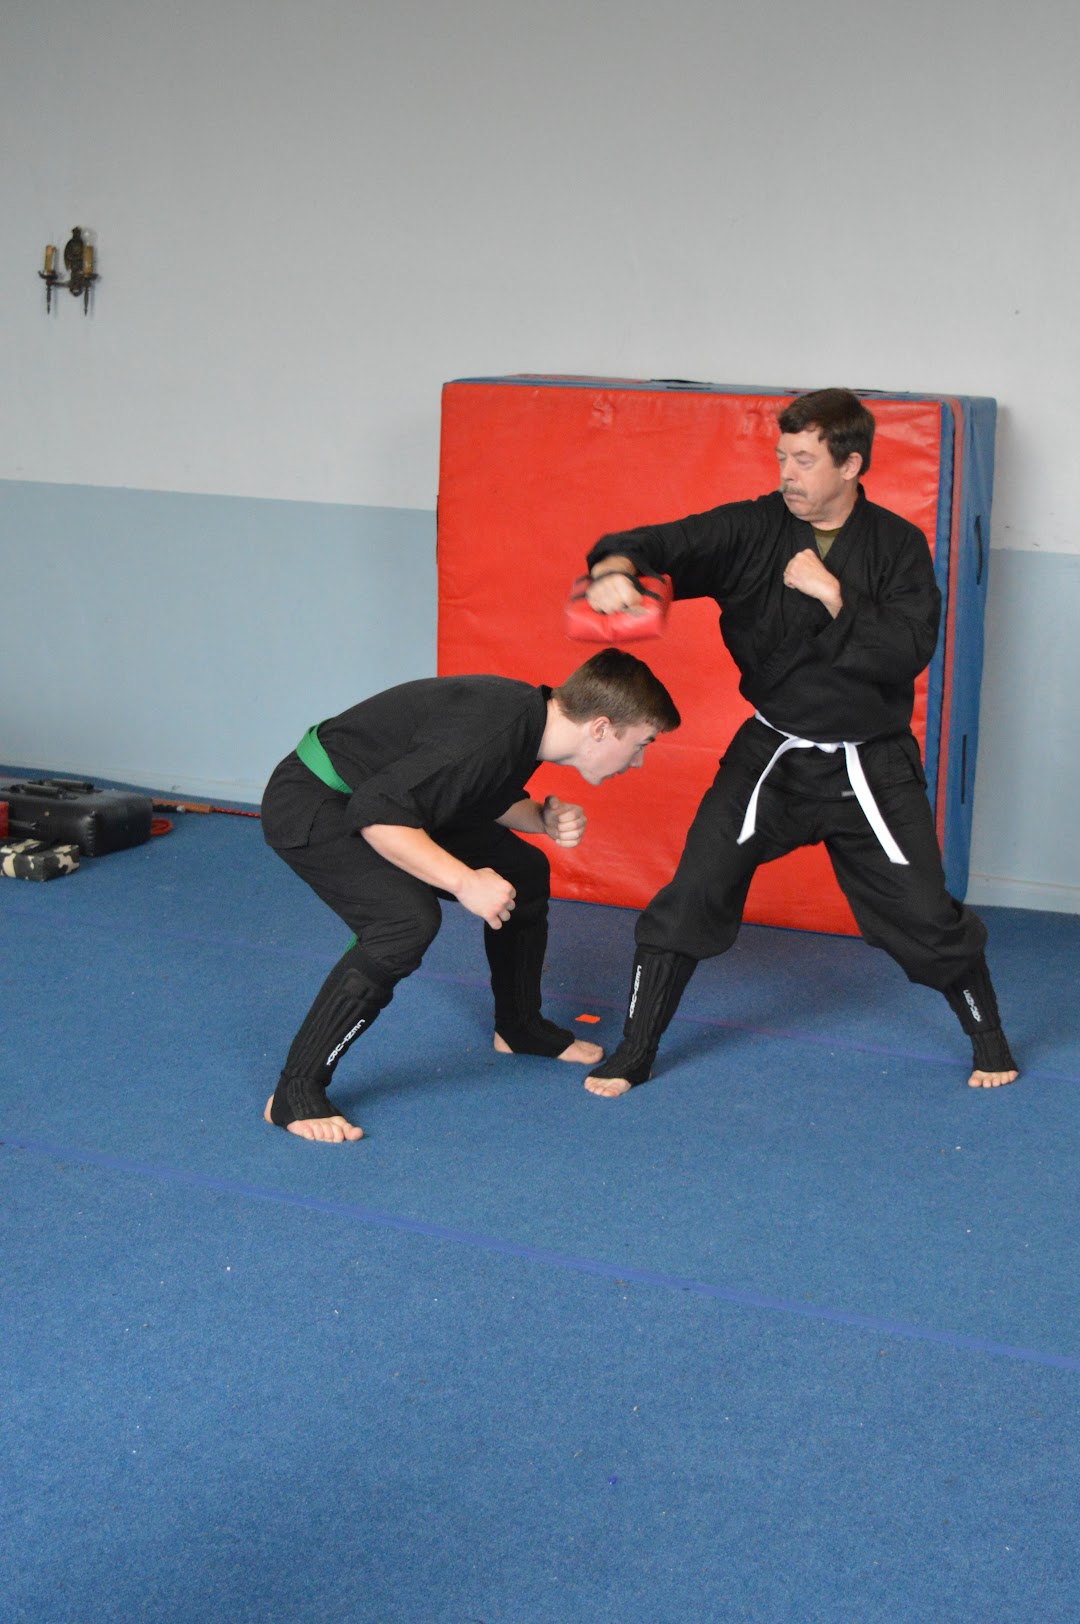 Black Dragon Martial Arts